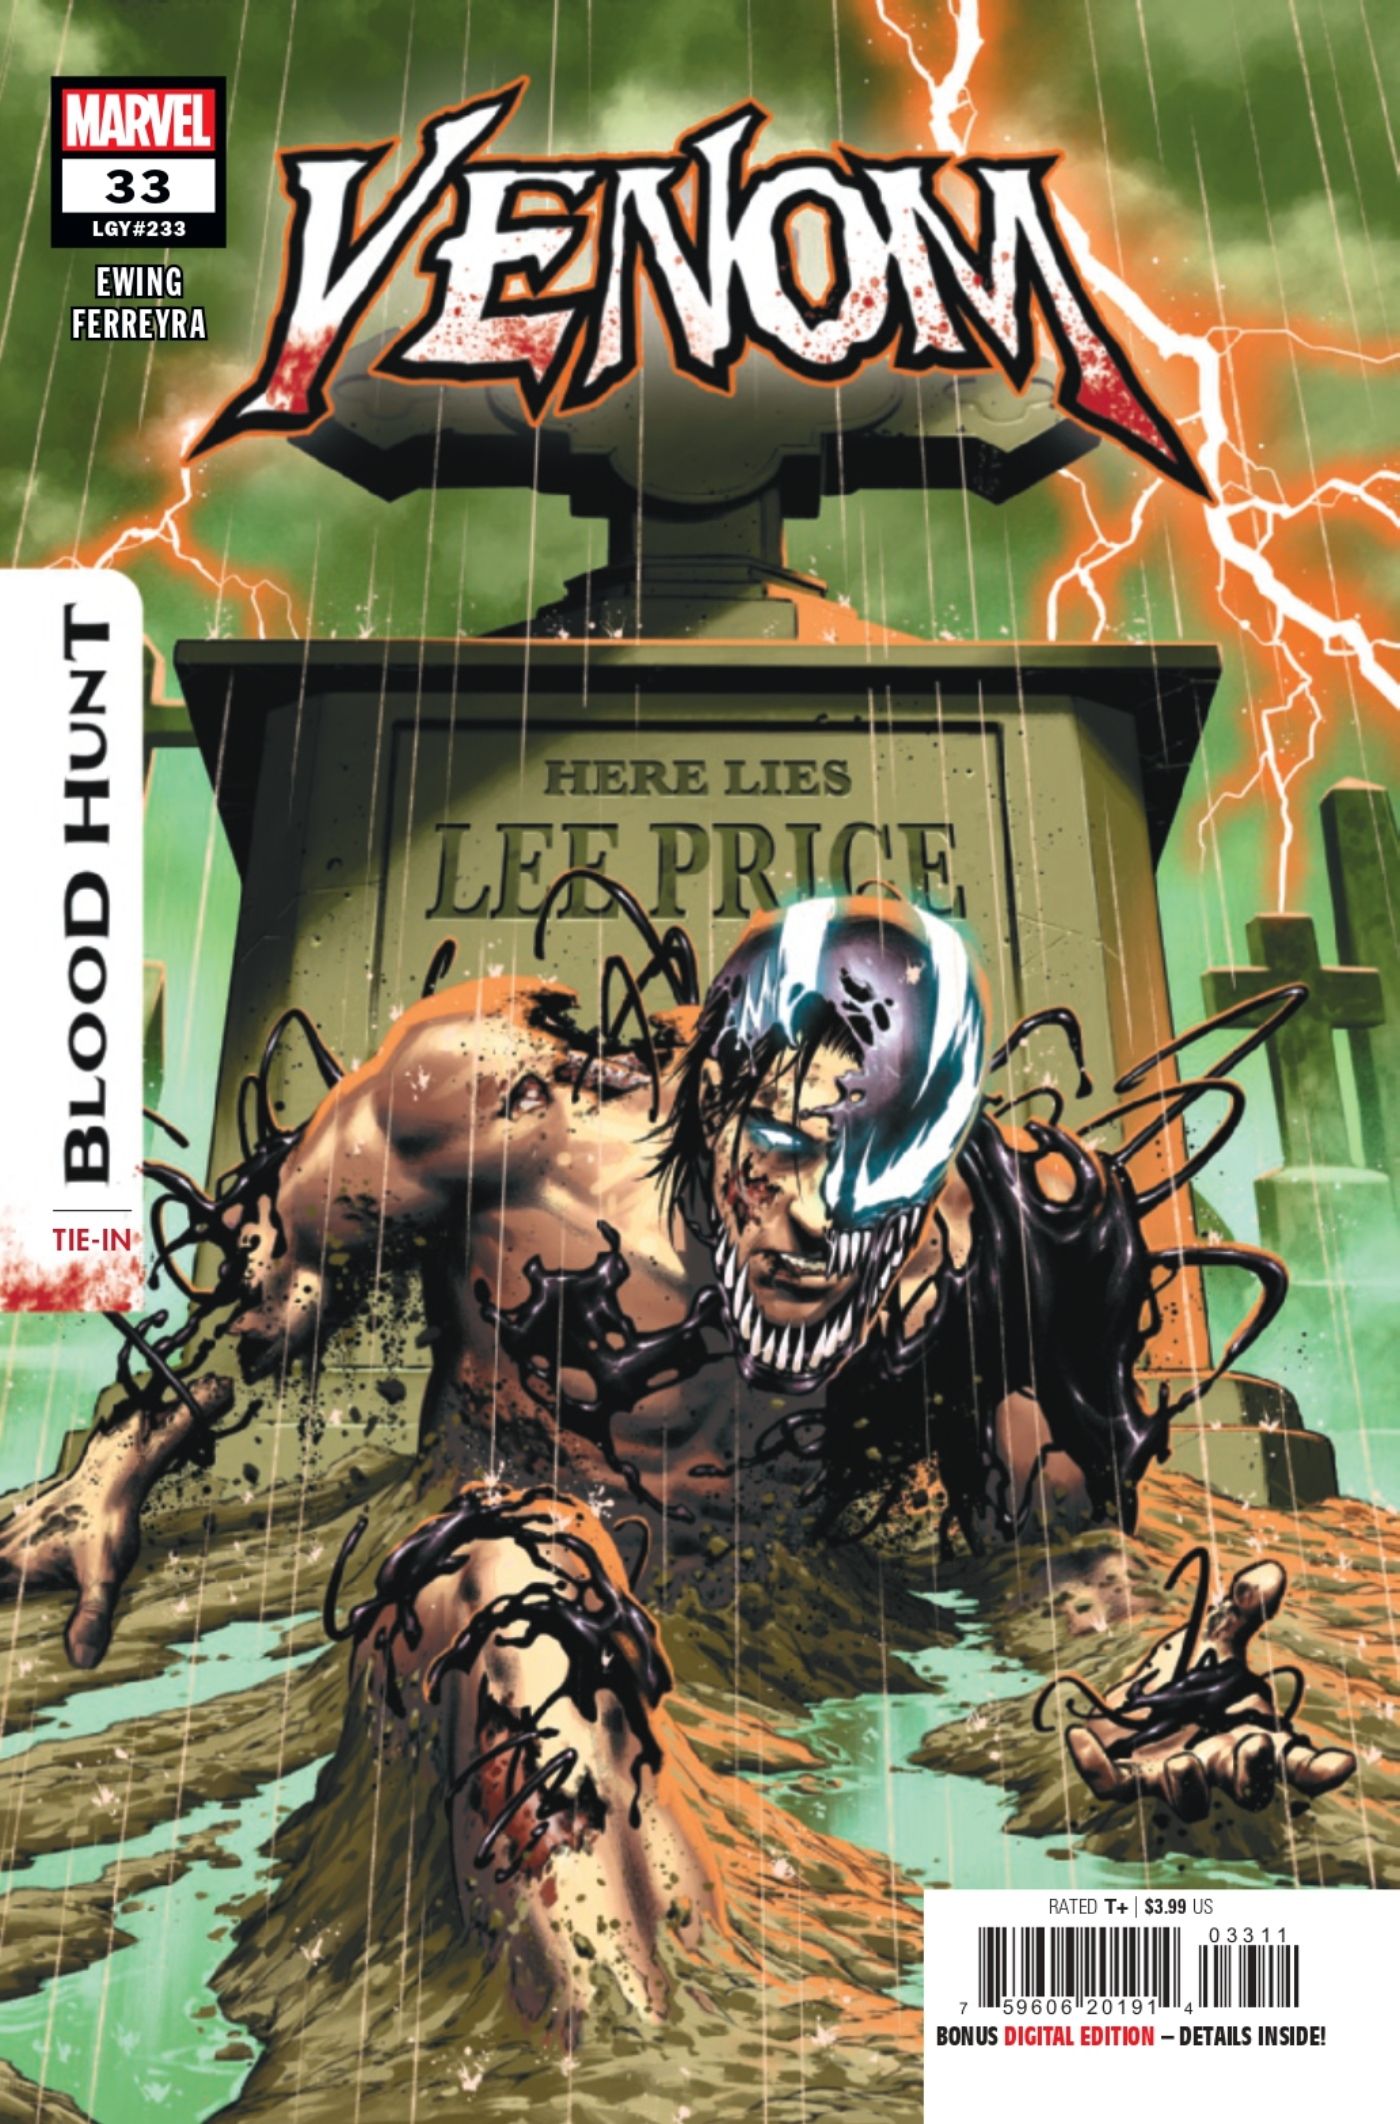 Venom #33 cover featuring Venom possessing the corpse of Lee Price.